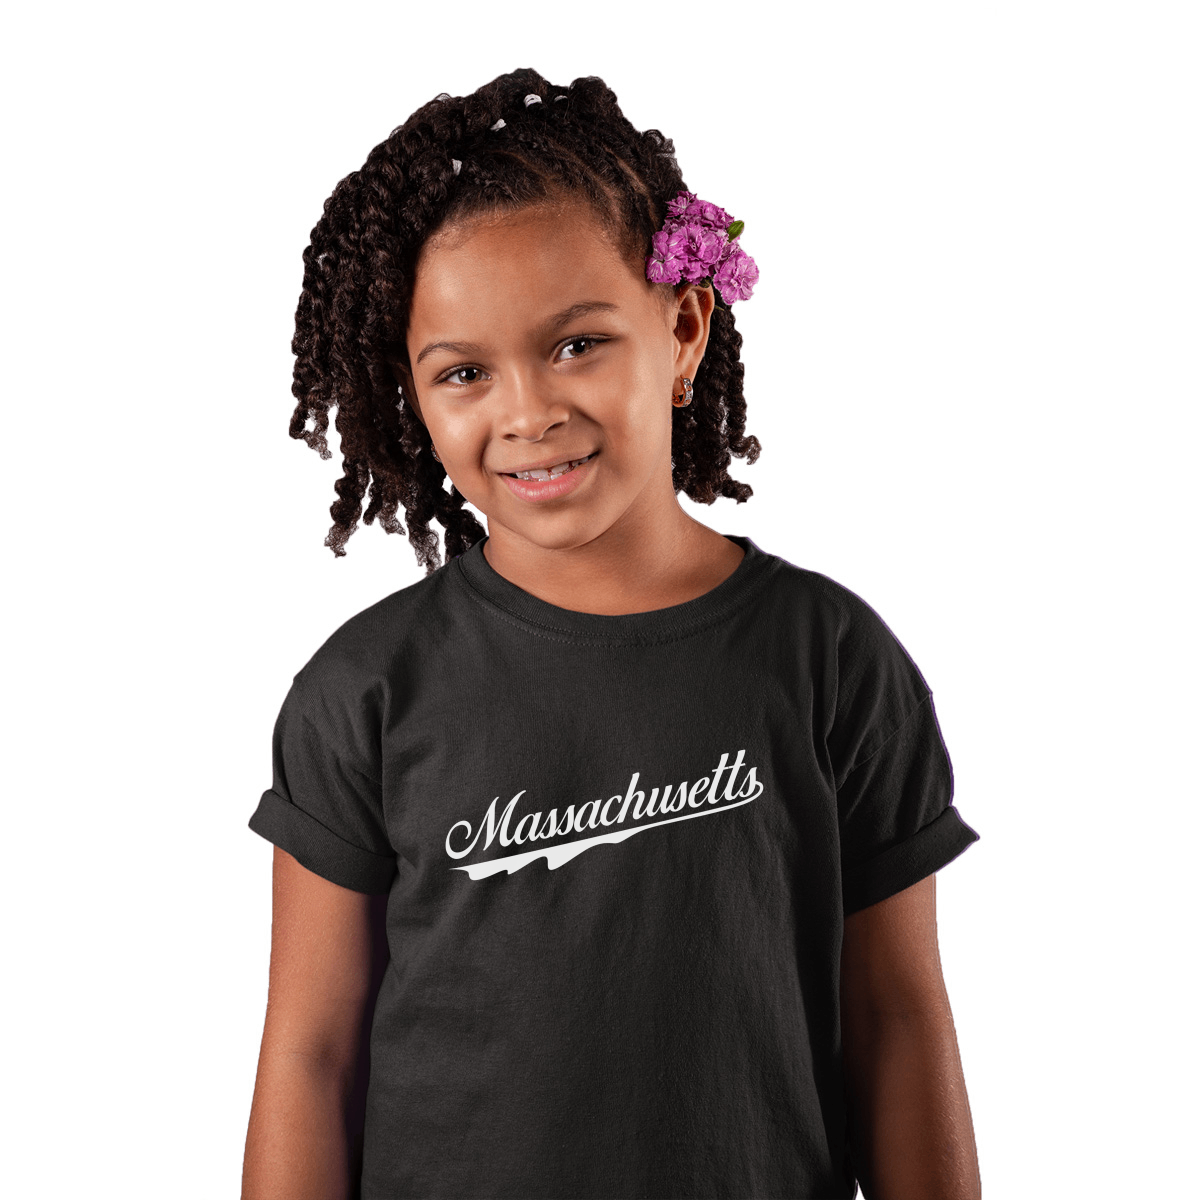 Massachusetts Kids T-shirt | Black